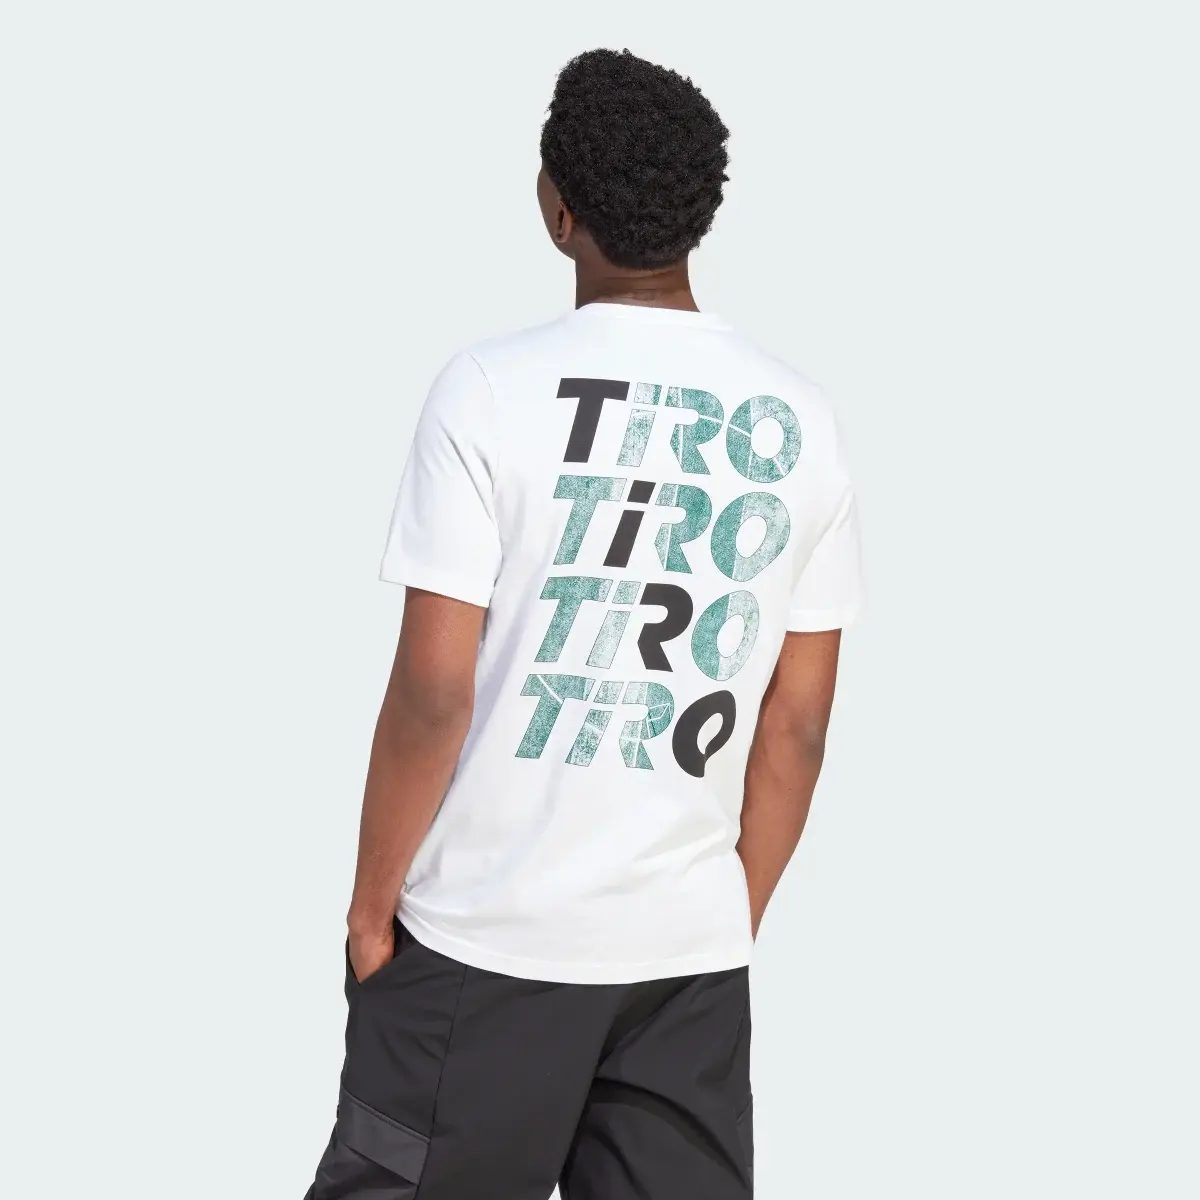 Adidas T-shirt lettrage graphique Tiro. 3